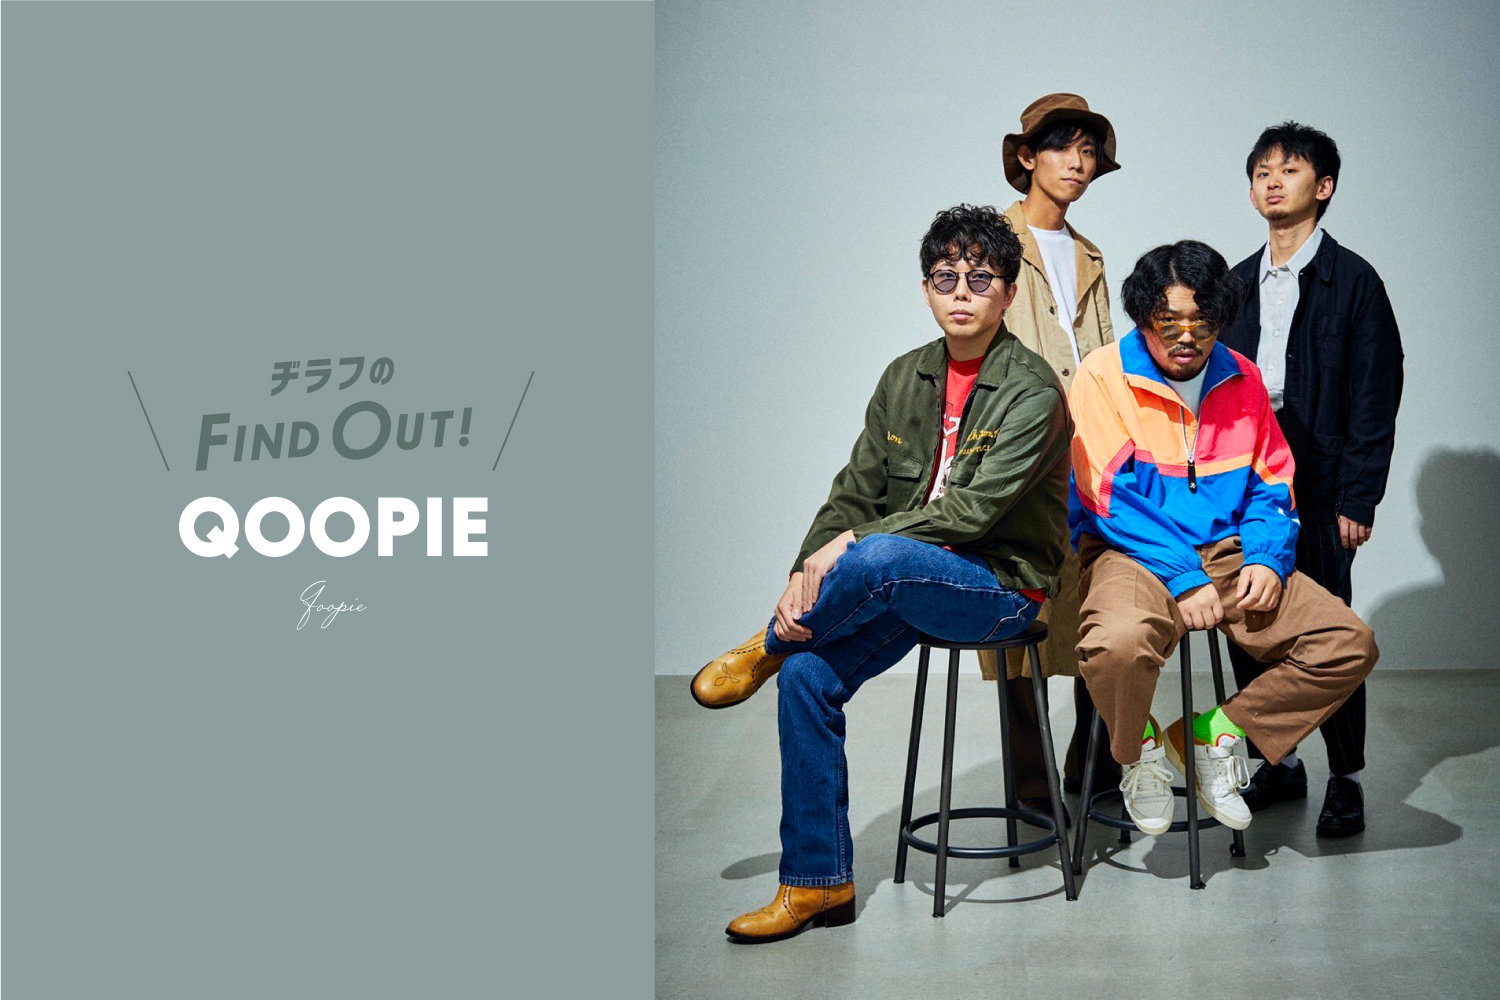 「【QOOPIE】インディーズとは思えない高い技術力と豊かな表現力。名古屋栄の路上発4ピースインストバンド」のアイキャッチ画像